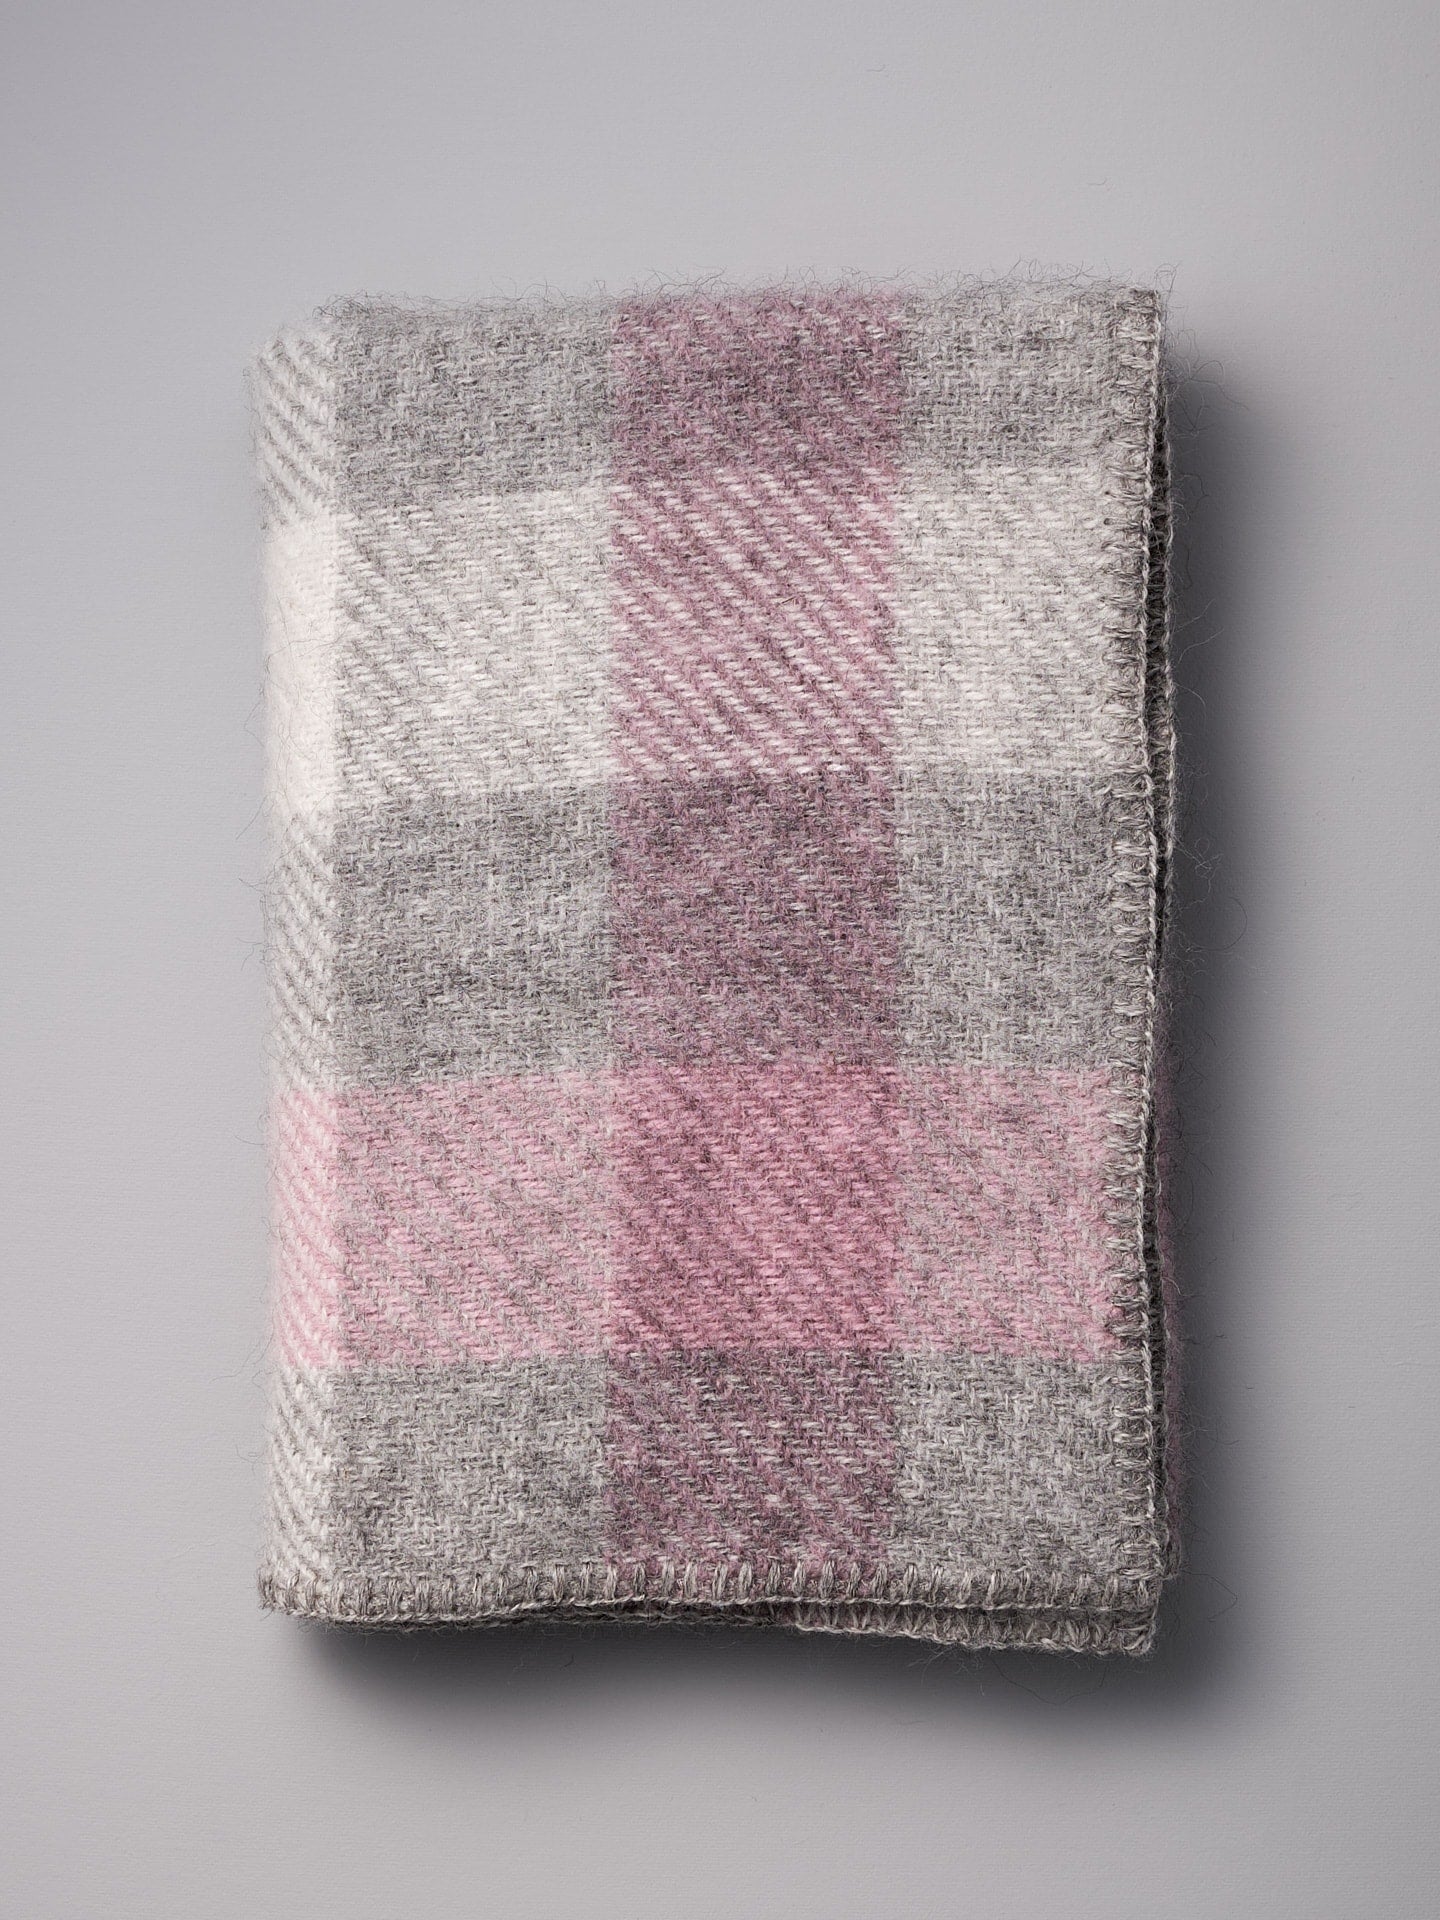 A Gotland Wool Baby Throw - Multi Pink blanket by Klippan on a grey surface.